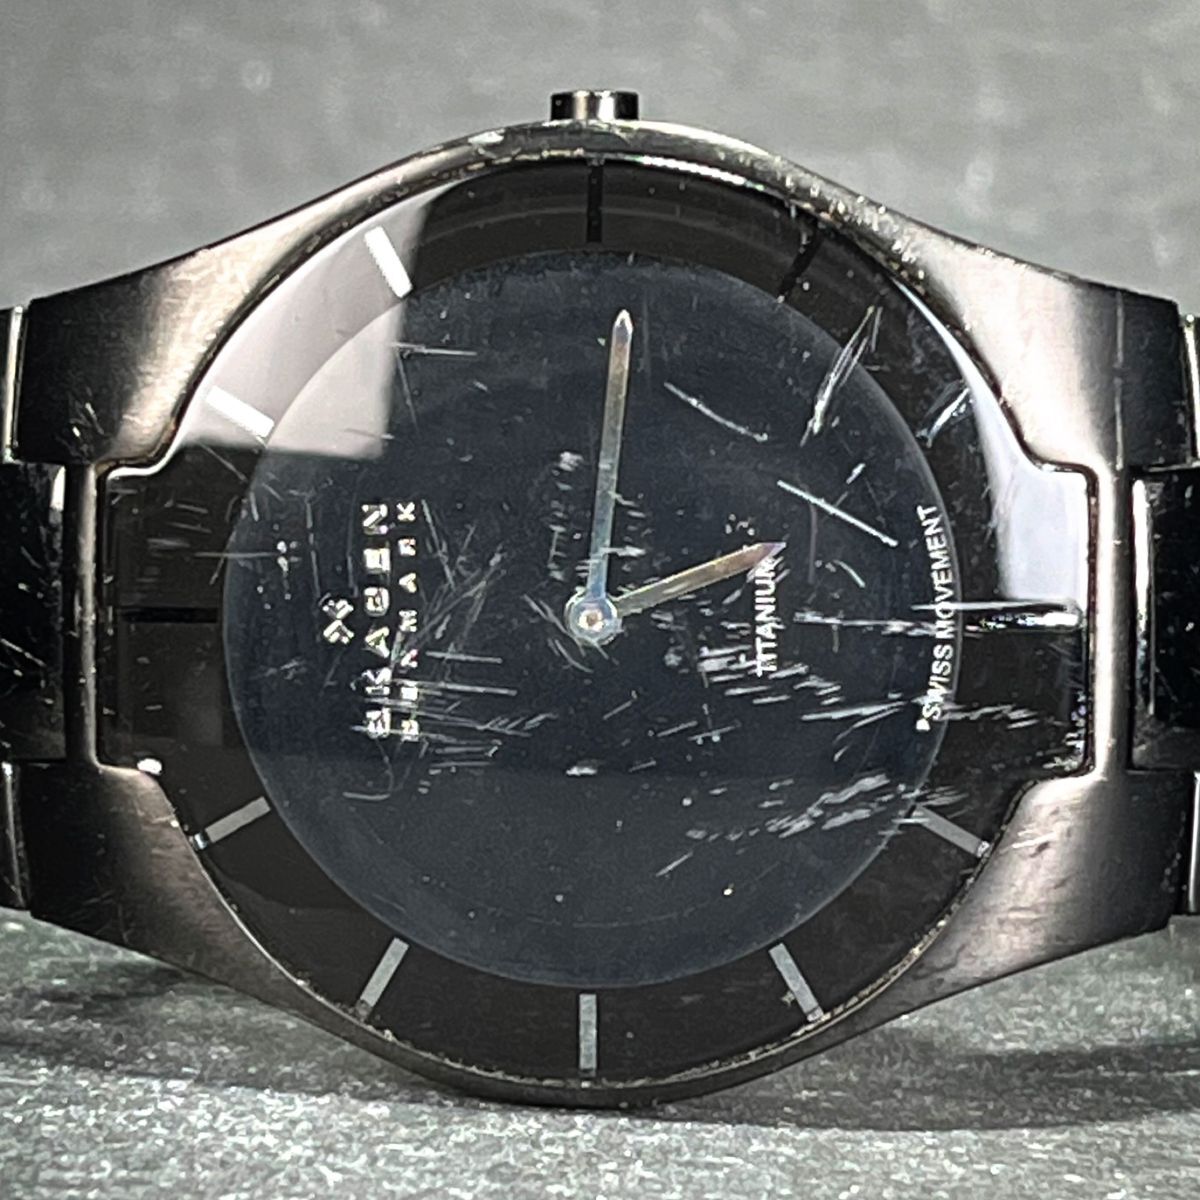 SKAGEN スカーゲン Black Label ブラックレーベル 585XLTMXB 腕時計 アナログ クオーツ ２針 ラウンド チタン メタルベルト 両開き式